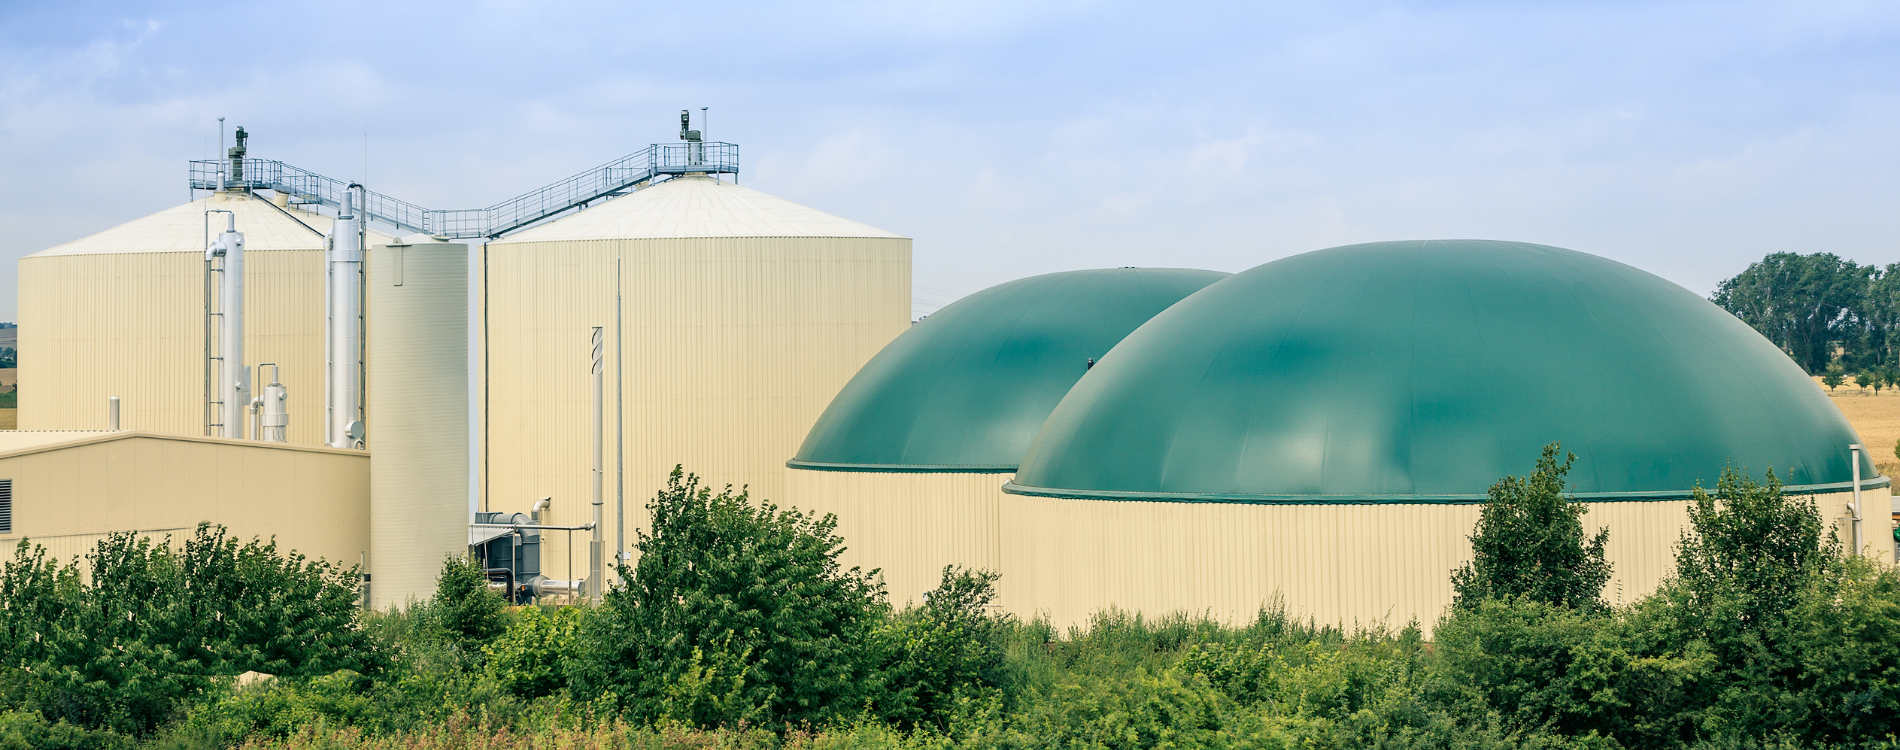 Biogas plant 2